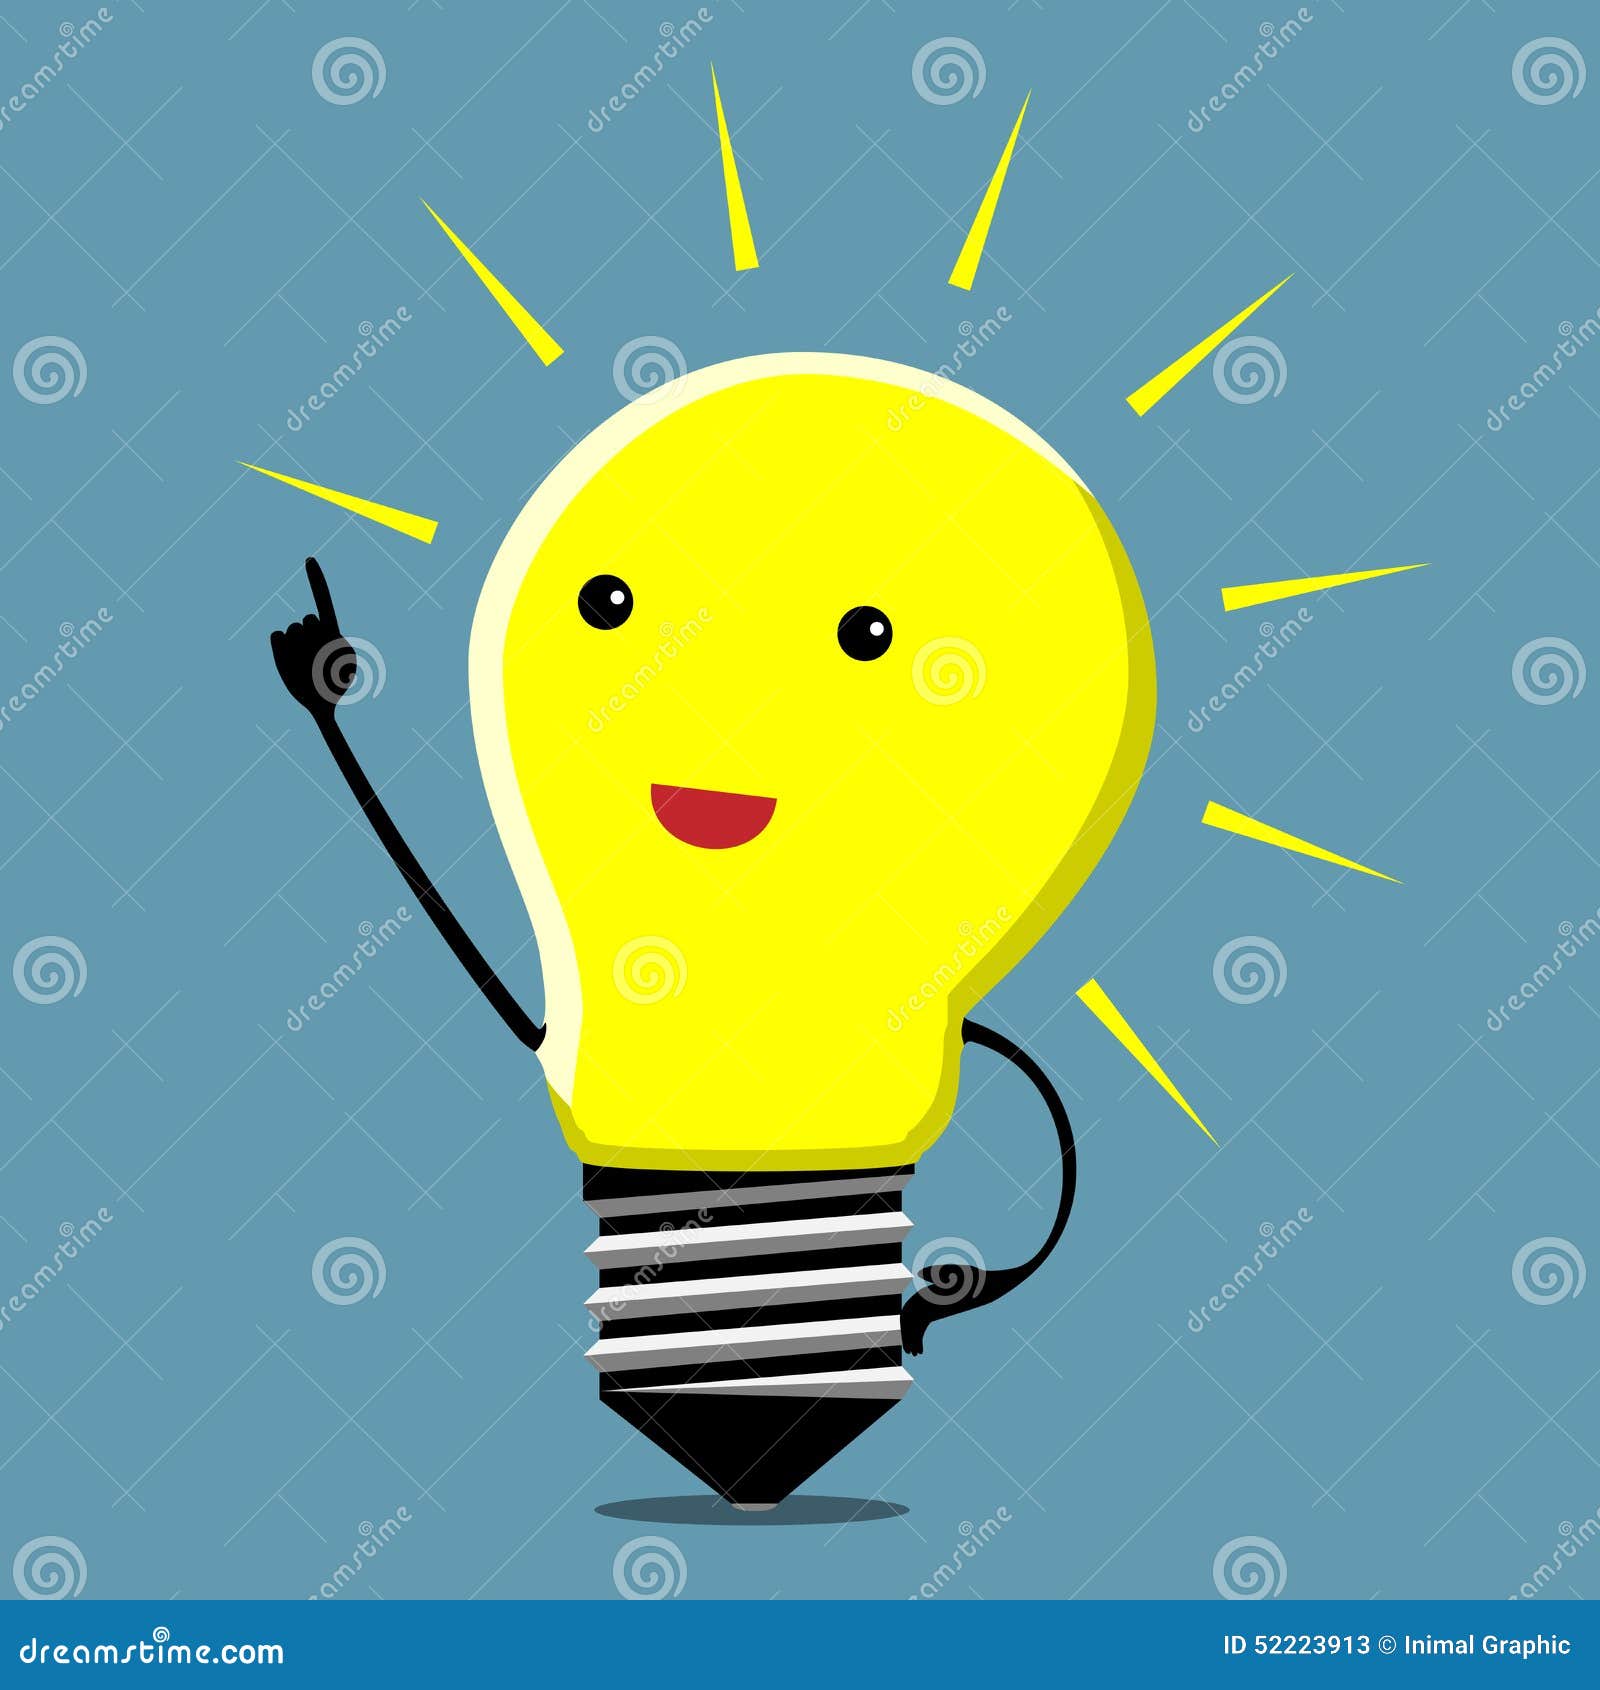 light bulb character, insight